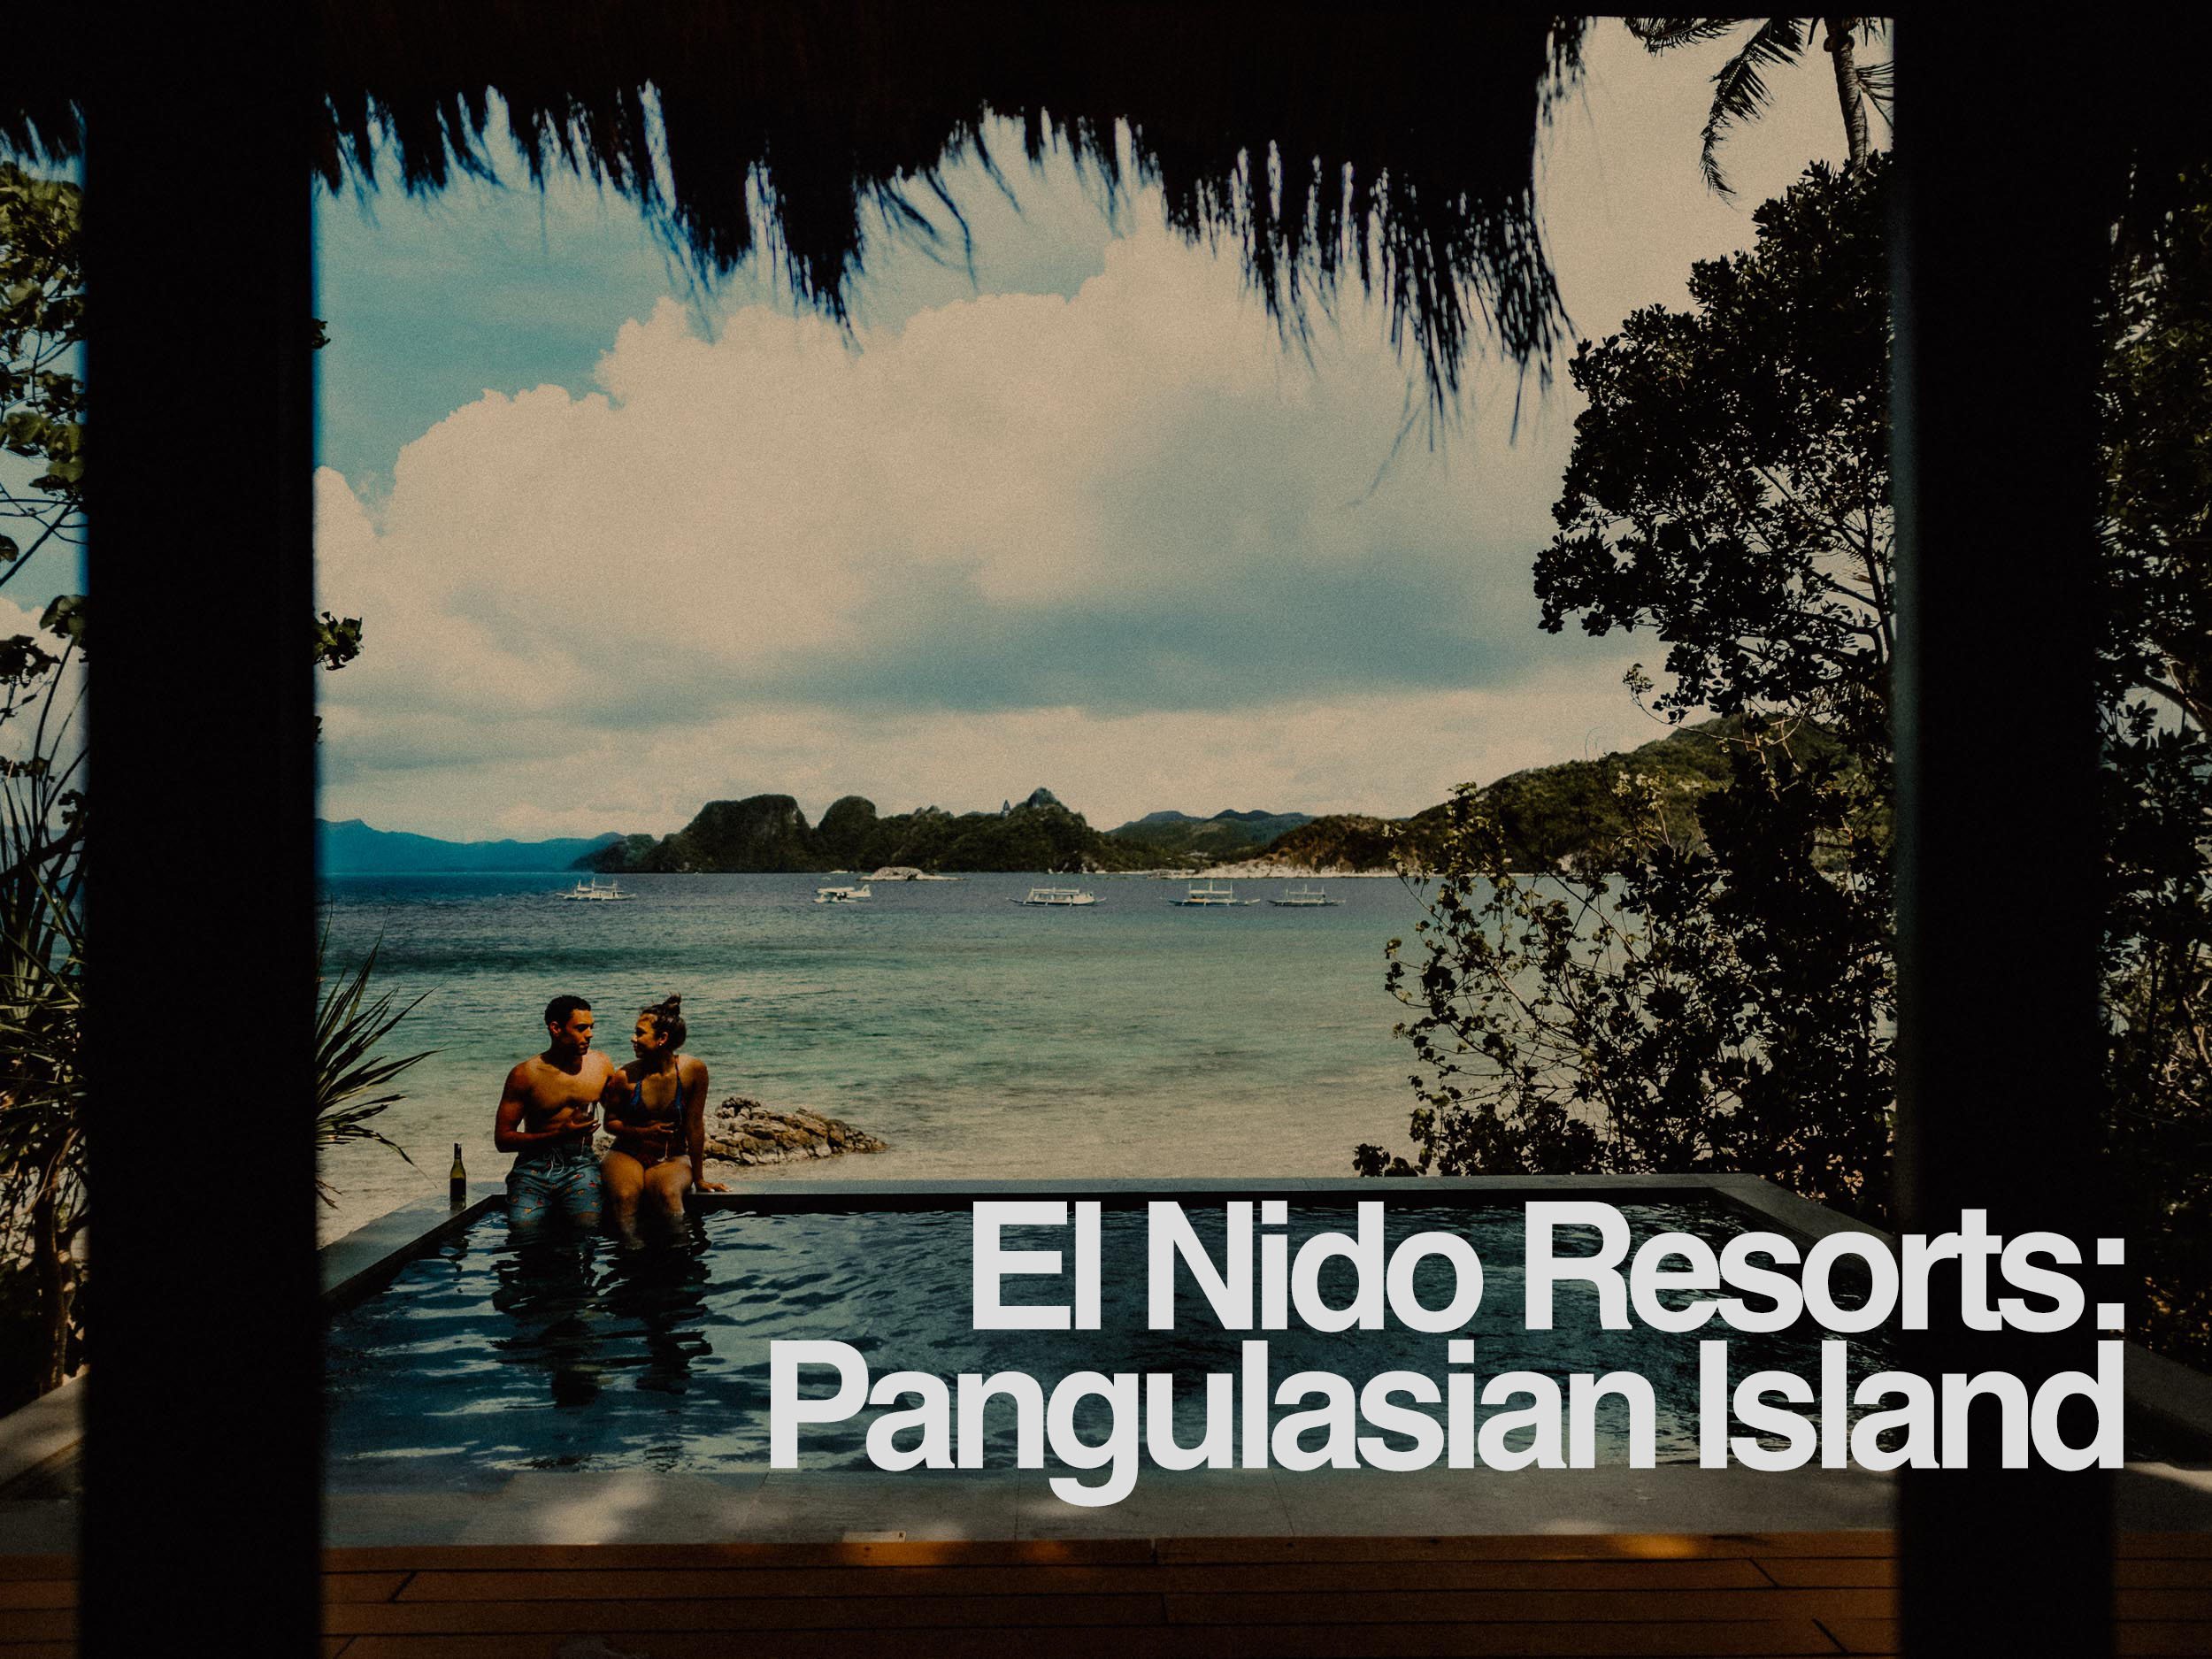 1-Pangulasian Island Resort Pangulasian Island El Nido Resorts Palawan Philippines.jpg